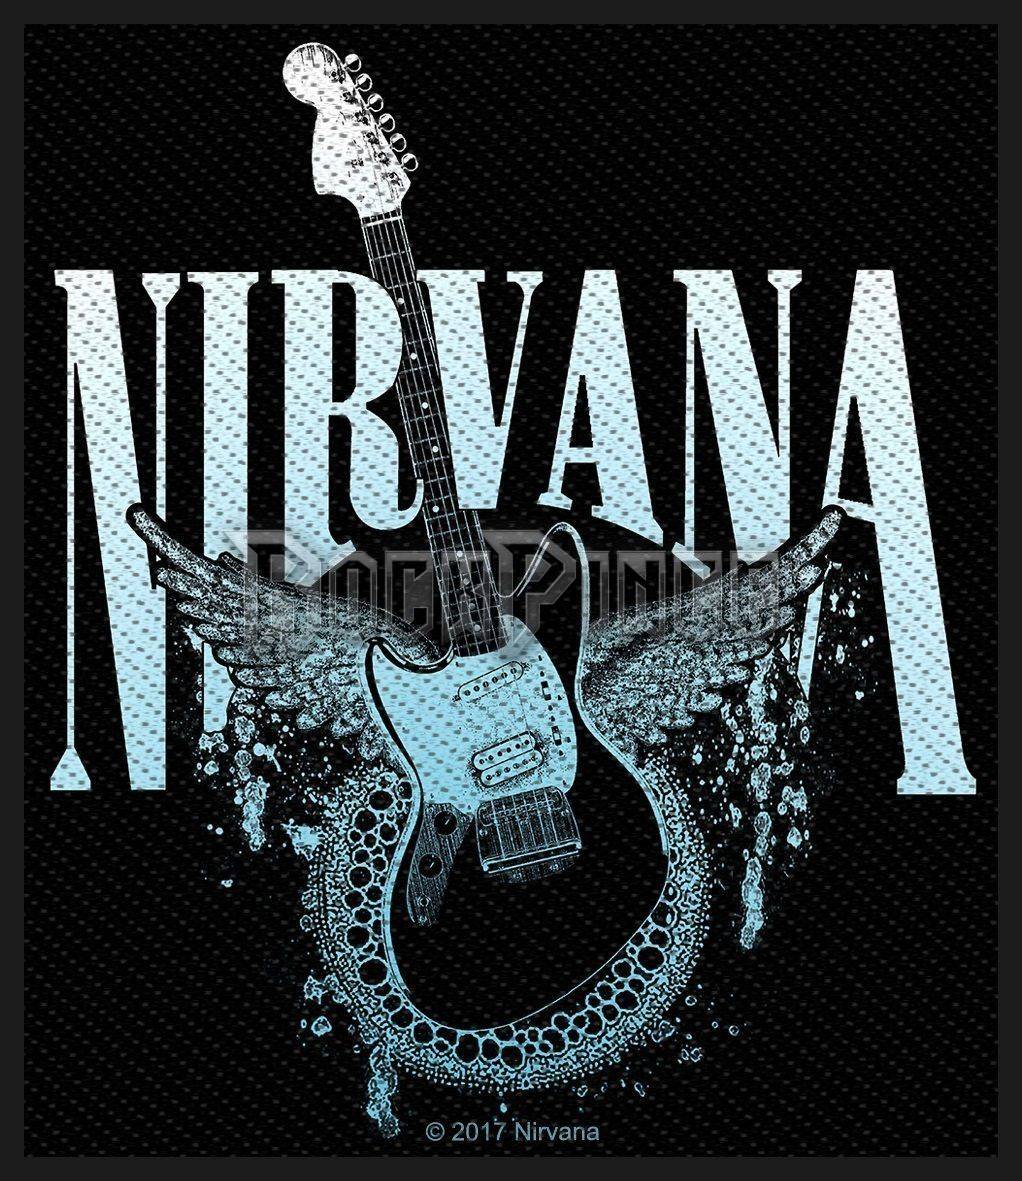 Nirvana - Guitar - kisfelvarró - SP2968